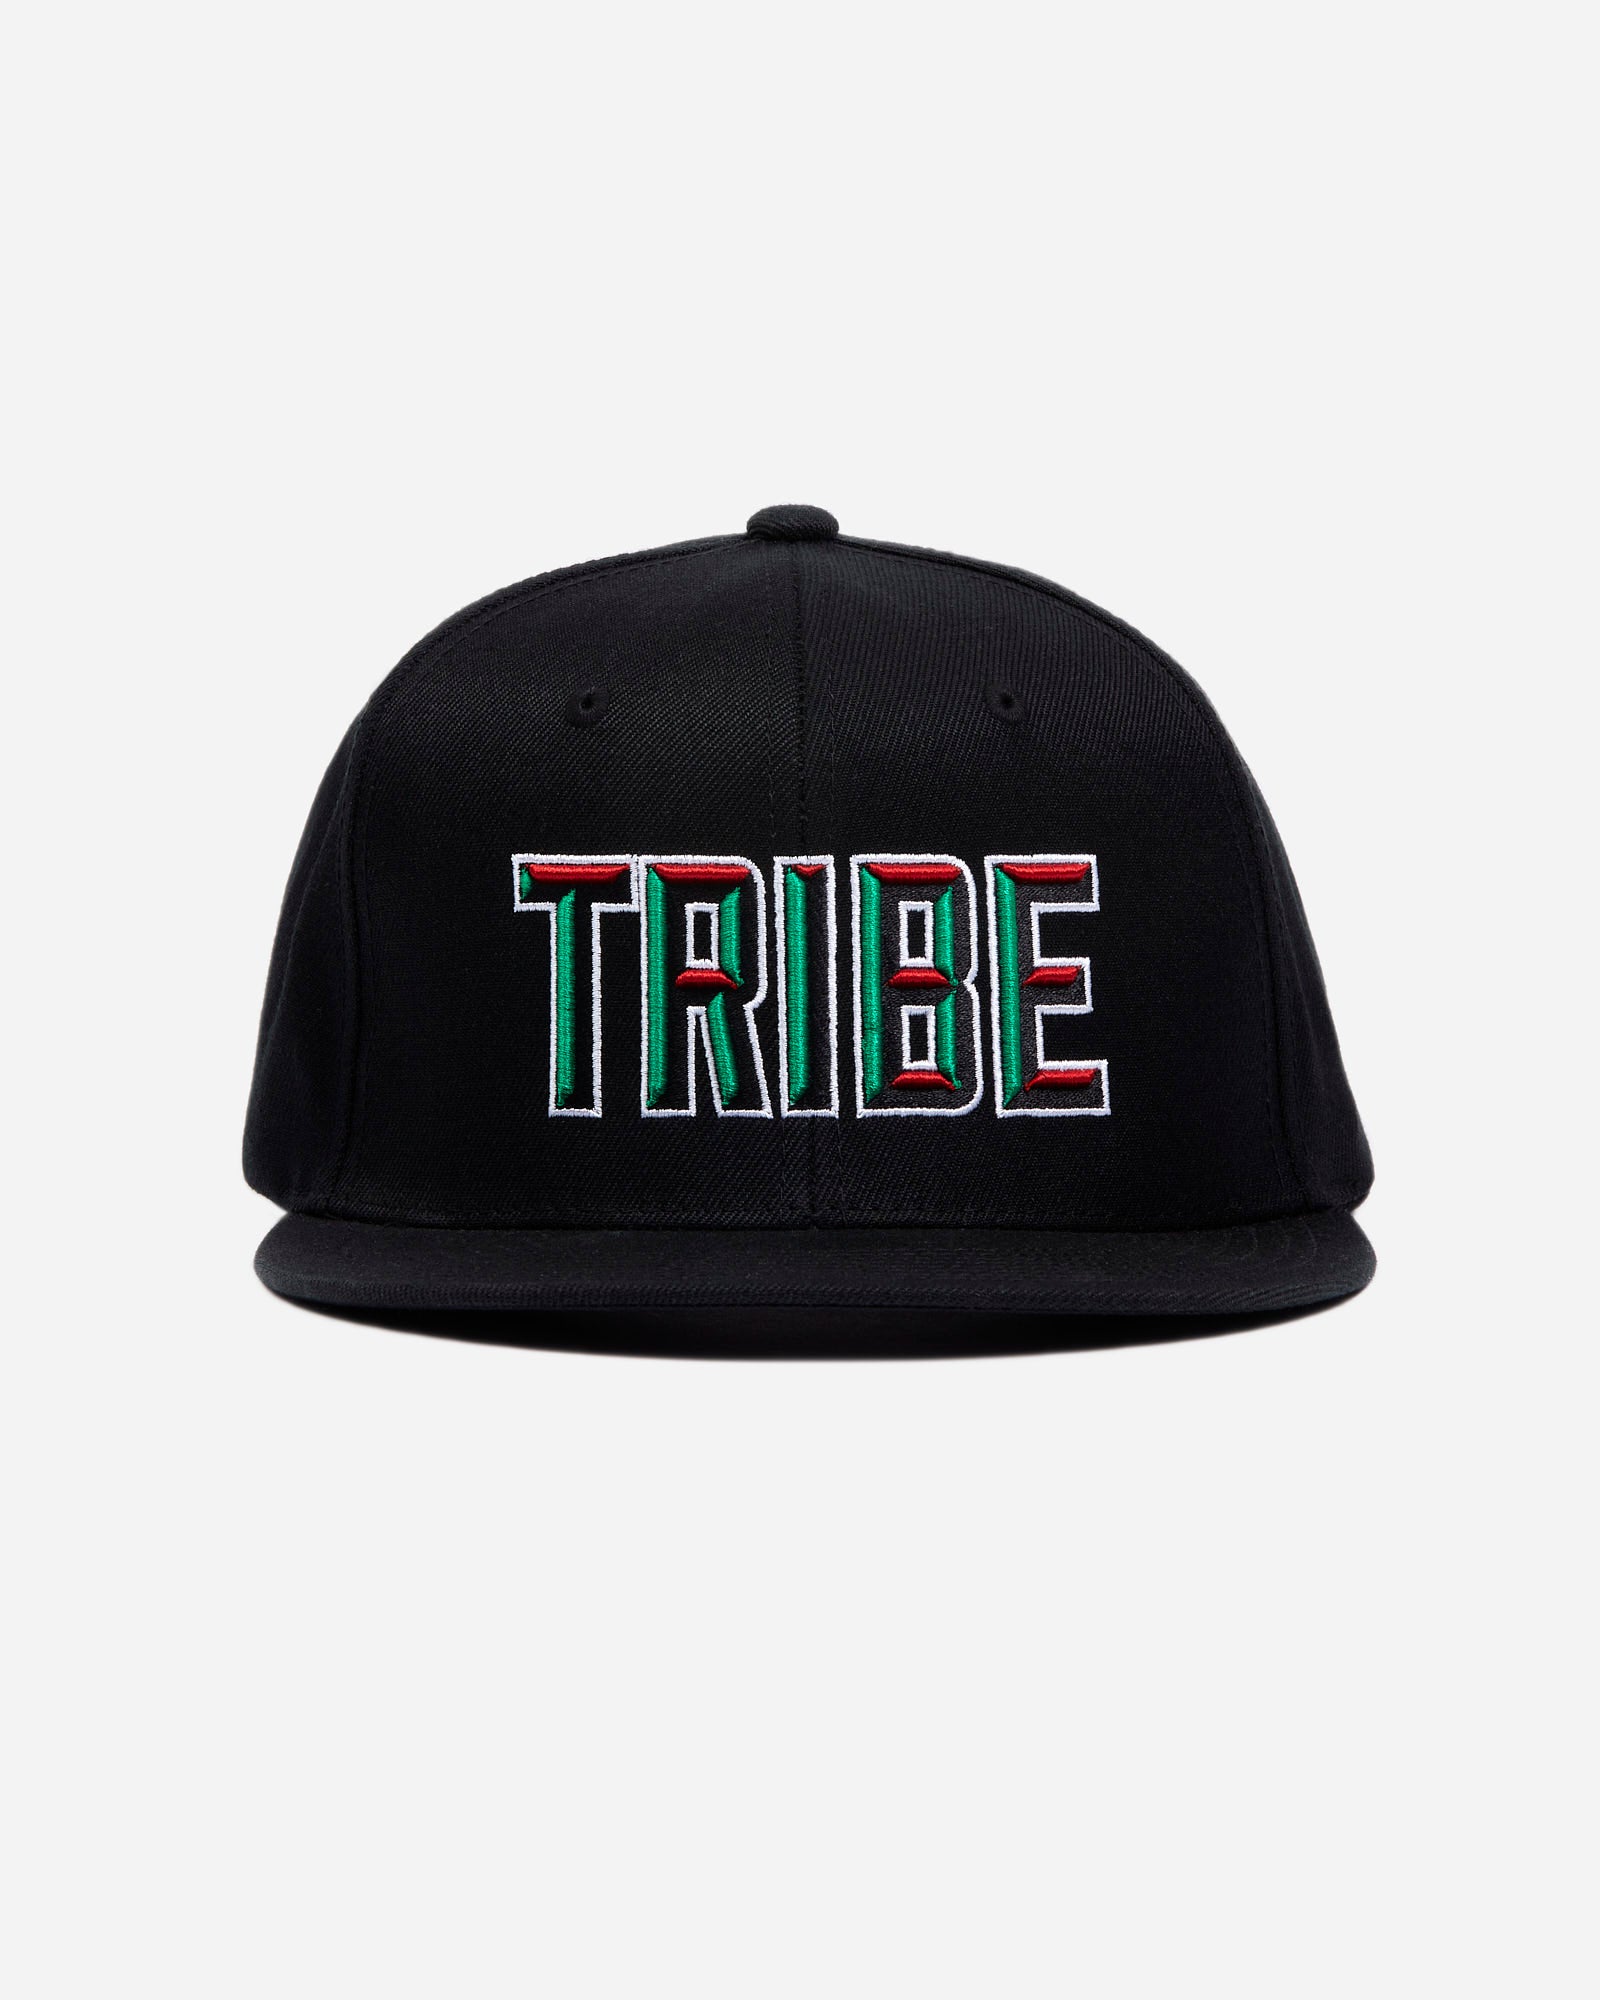 Tribe Block Snapback Black Hat